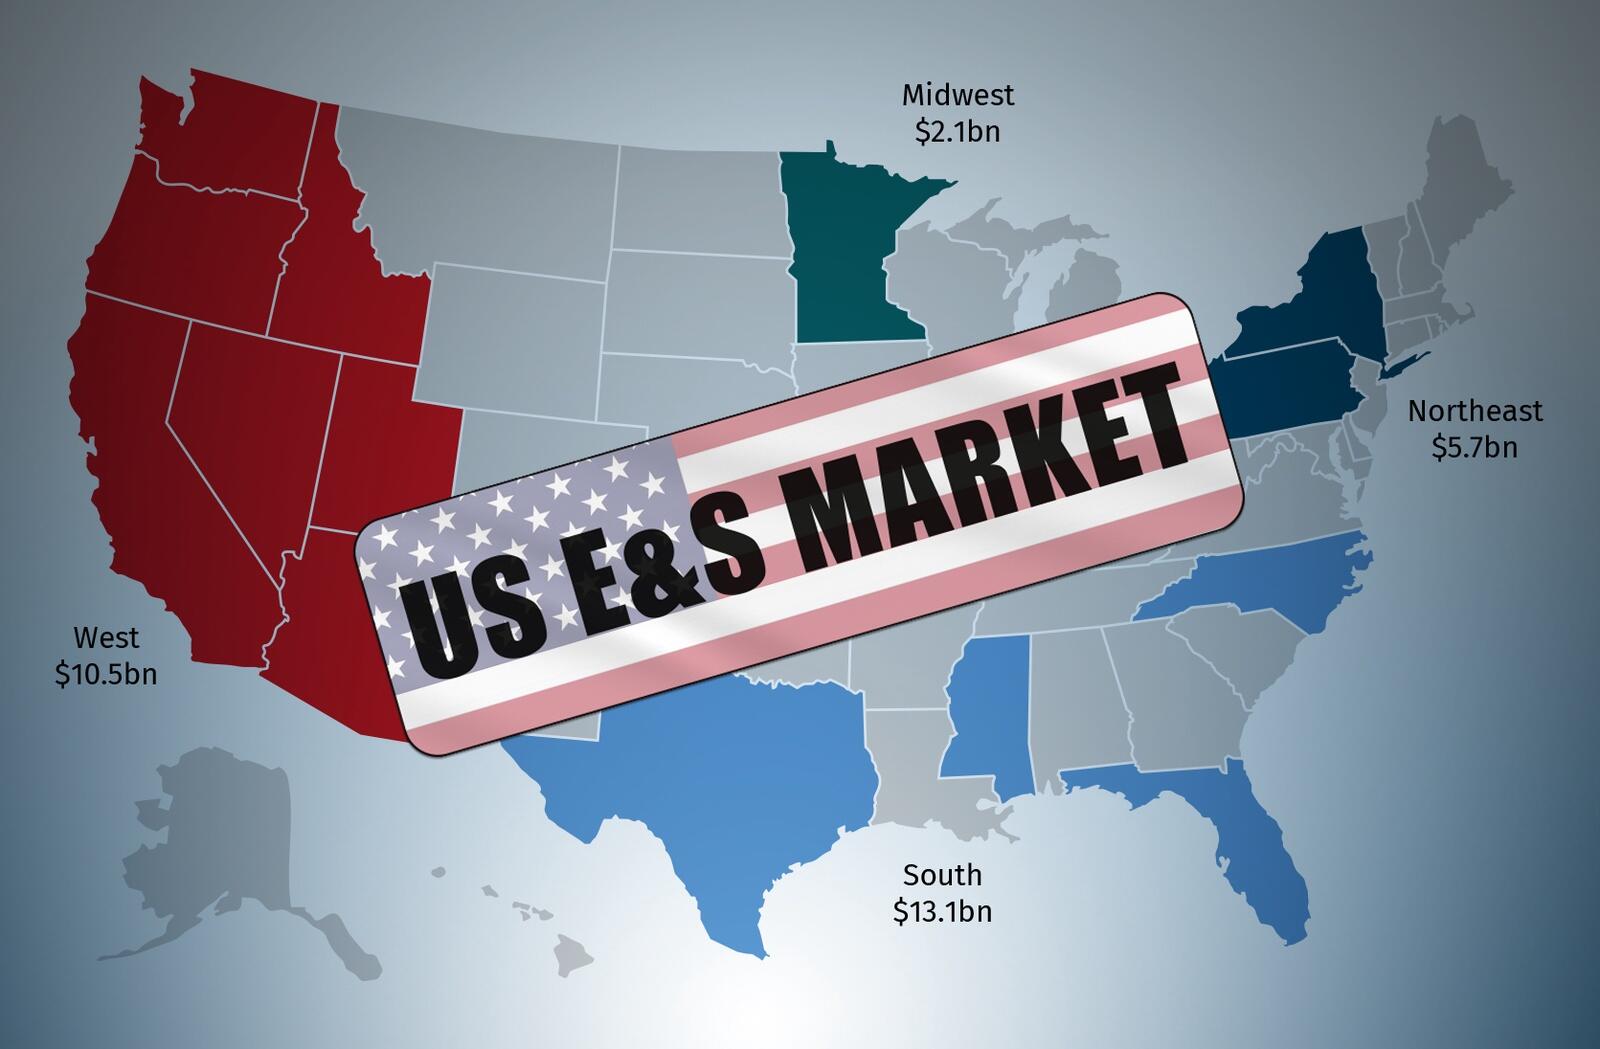 US E&S market